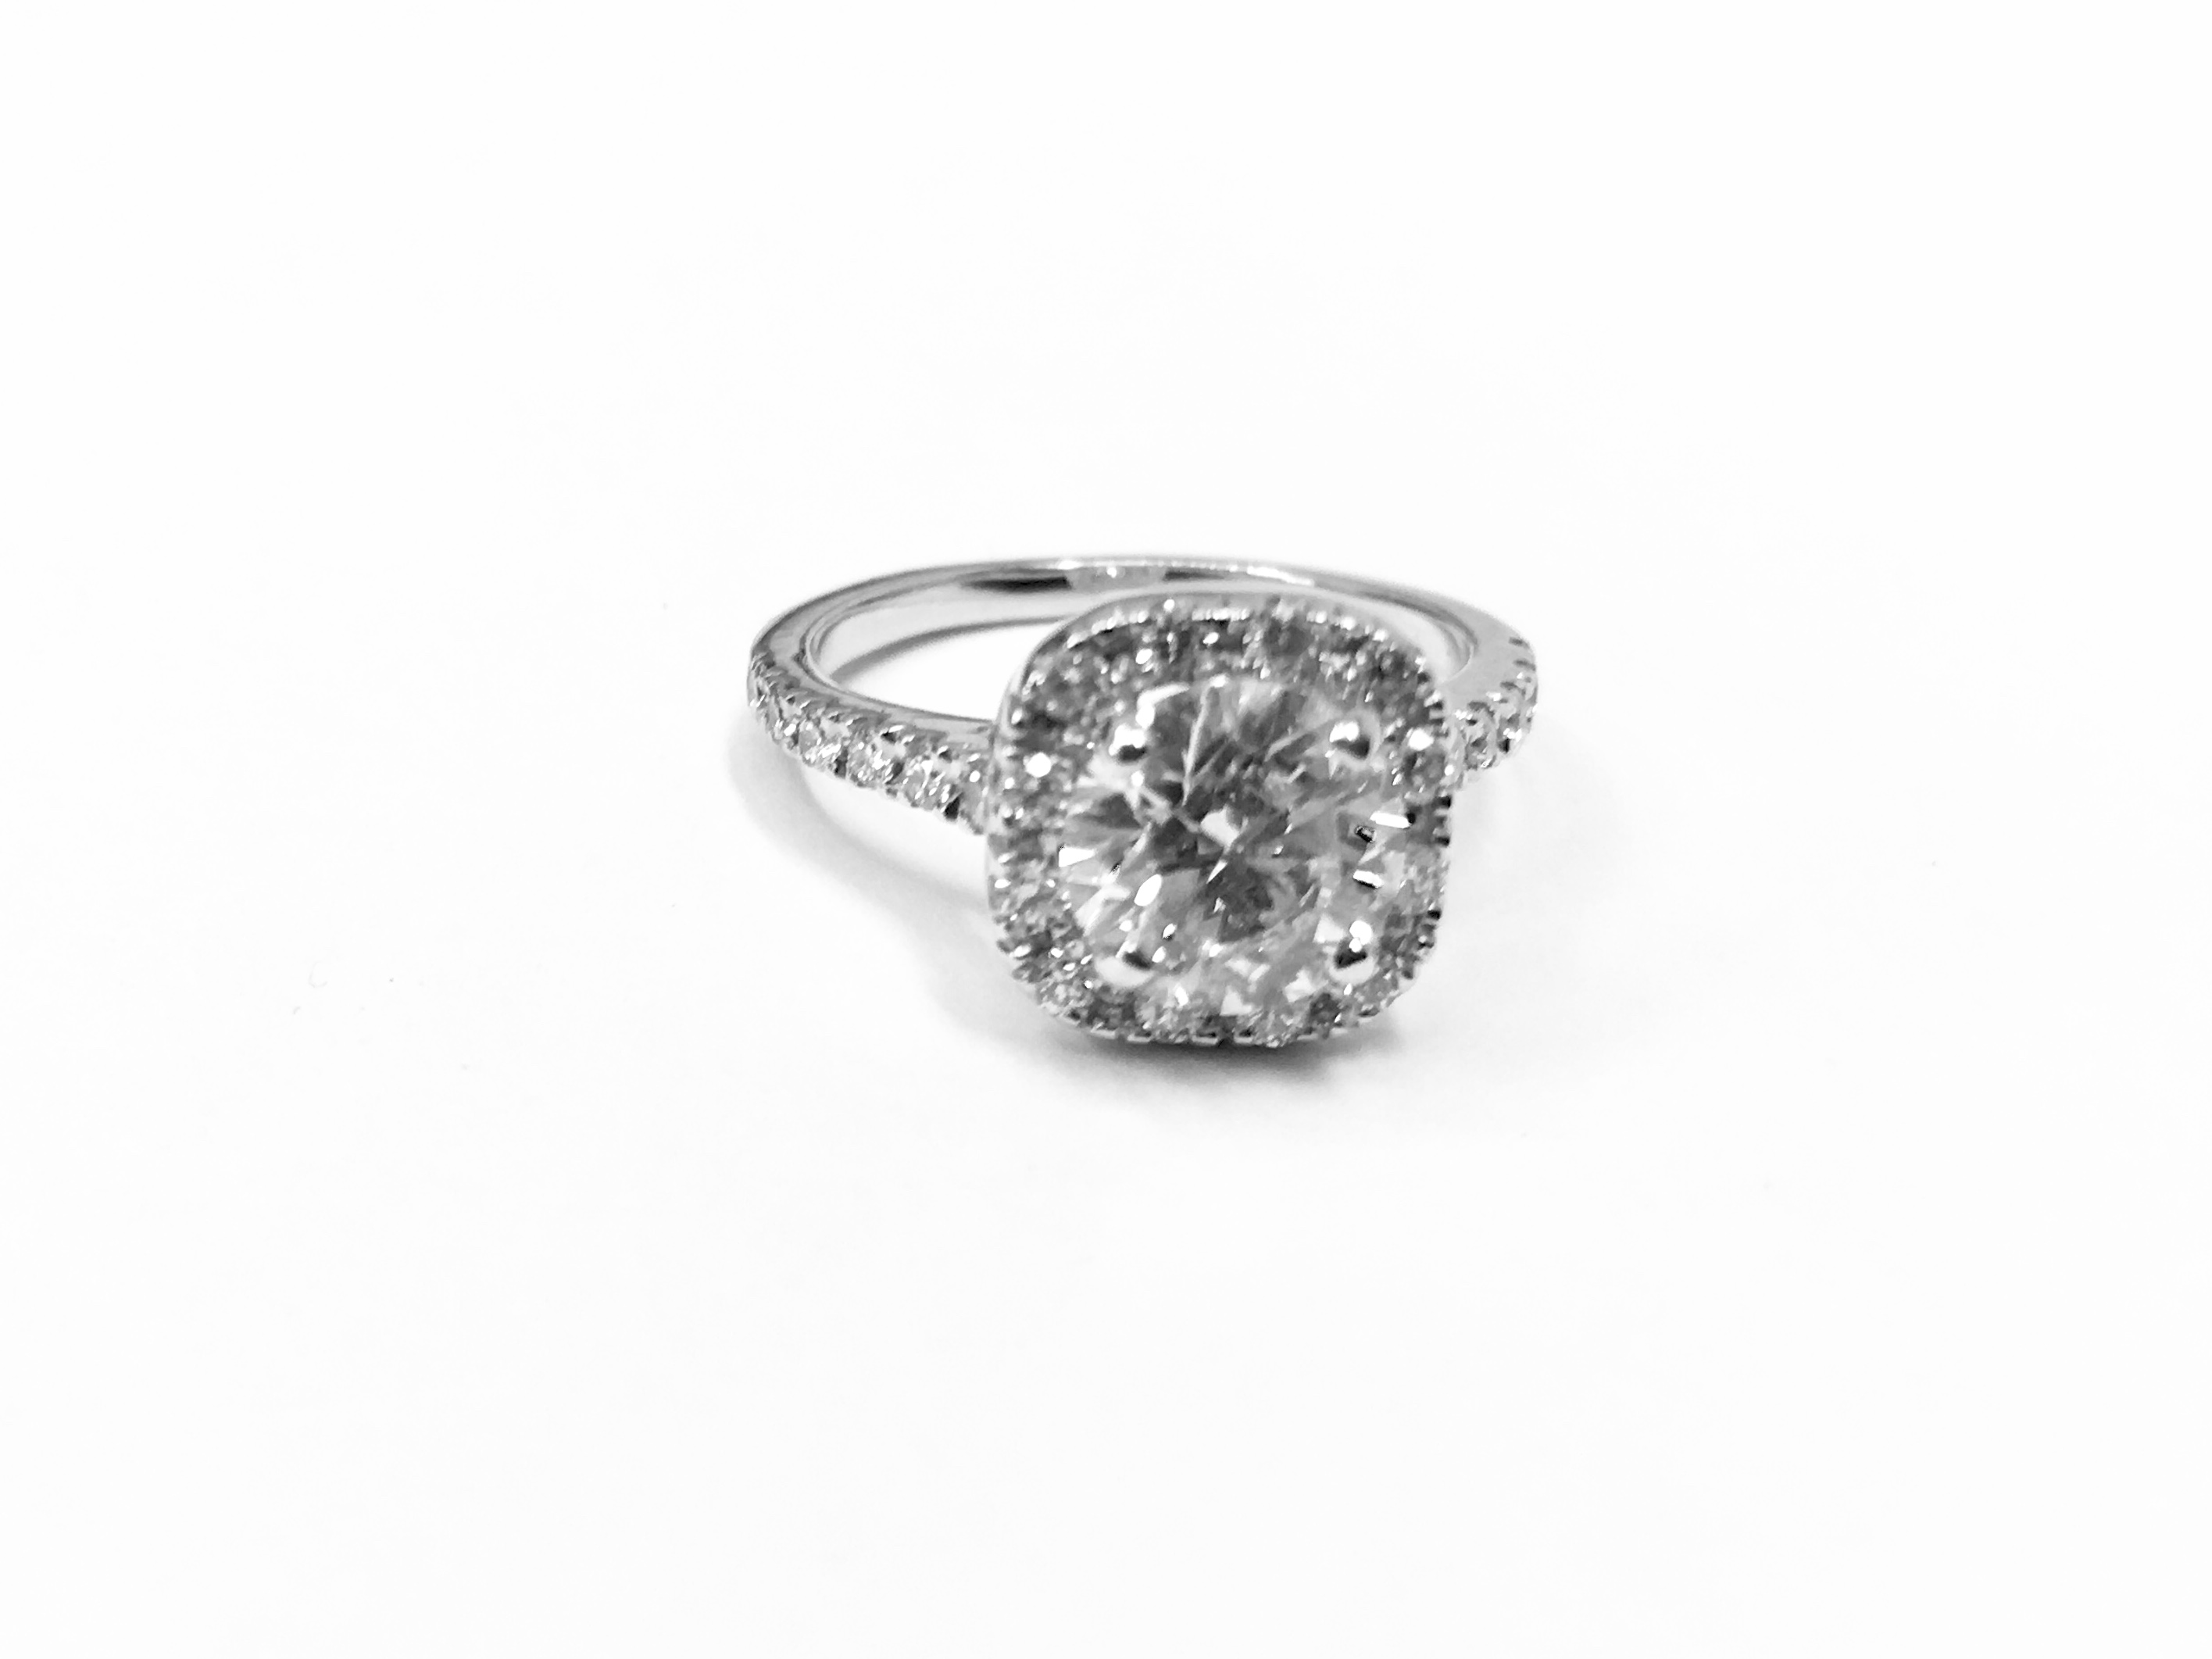 1.25ct diamond halo ring set in 18ct white gold - Image 4 of 24